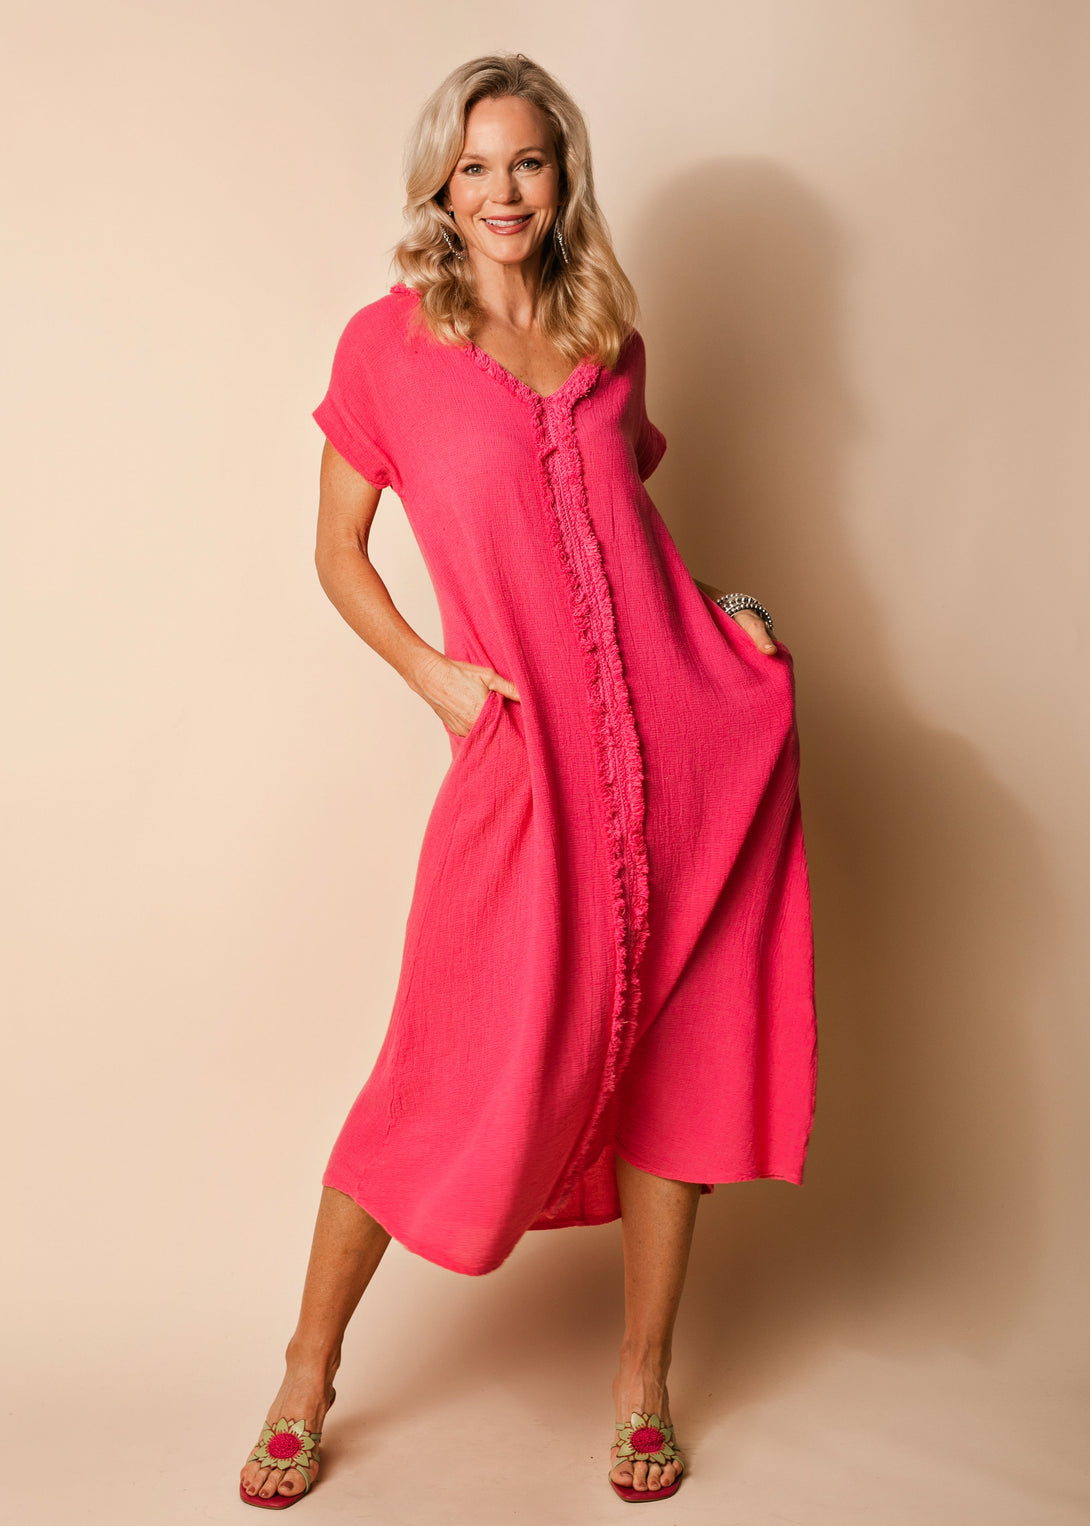 Kaidi Linen Dress in Raspberry Sorbet - Imagine Fashion